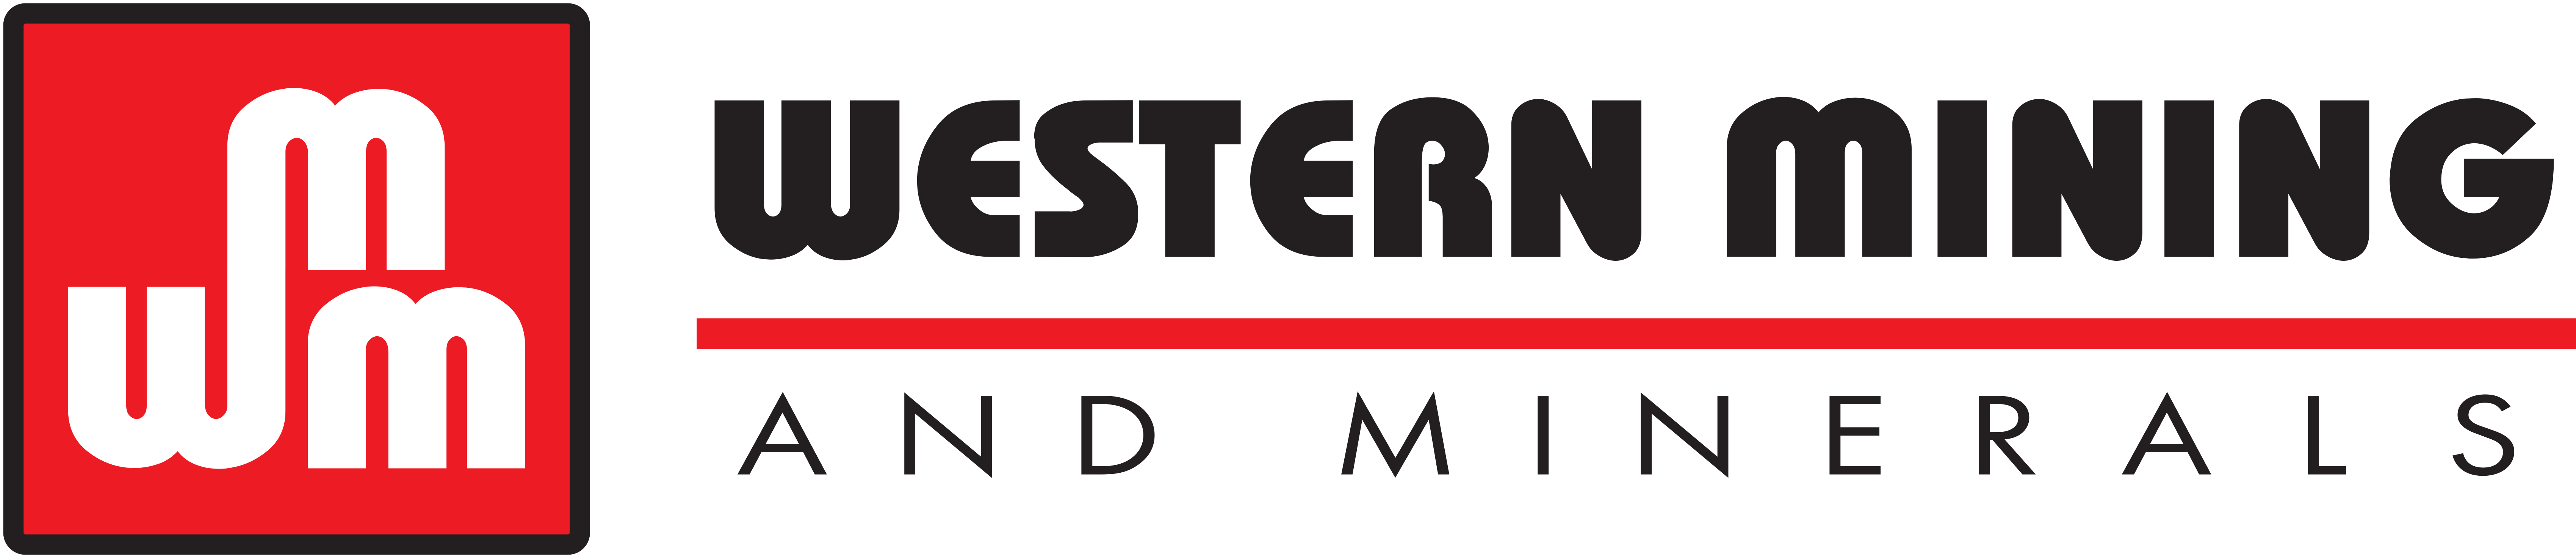 Western Mining and Minerals Logo - Full logo